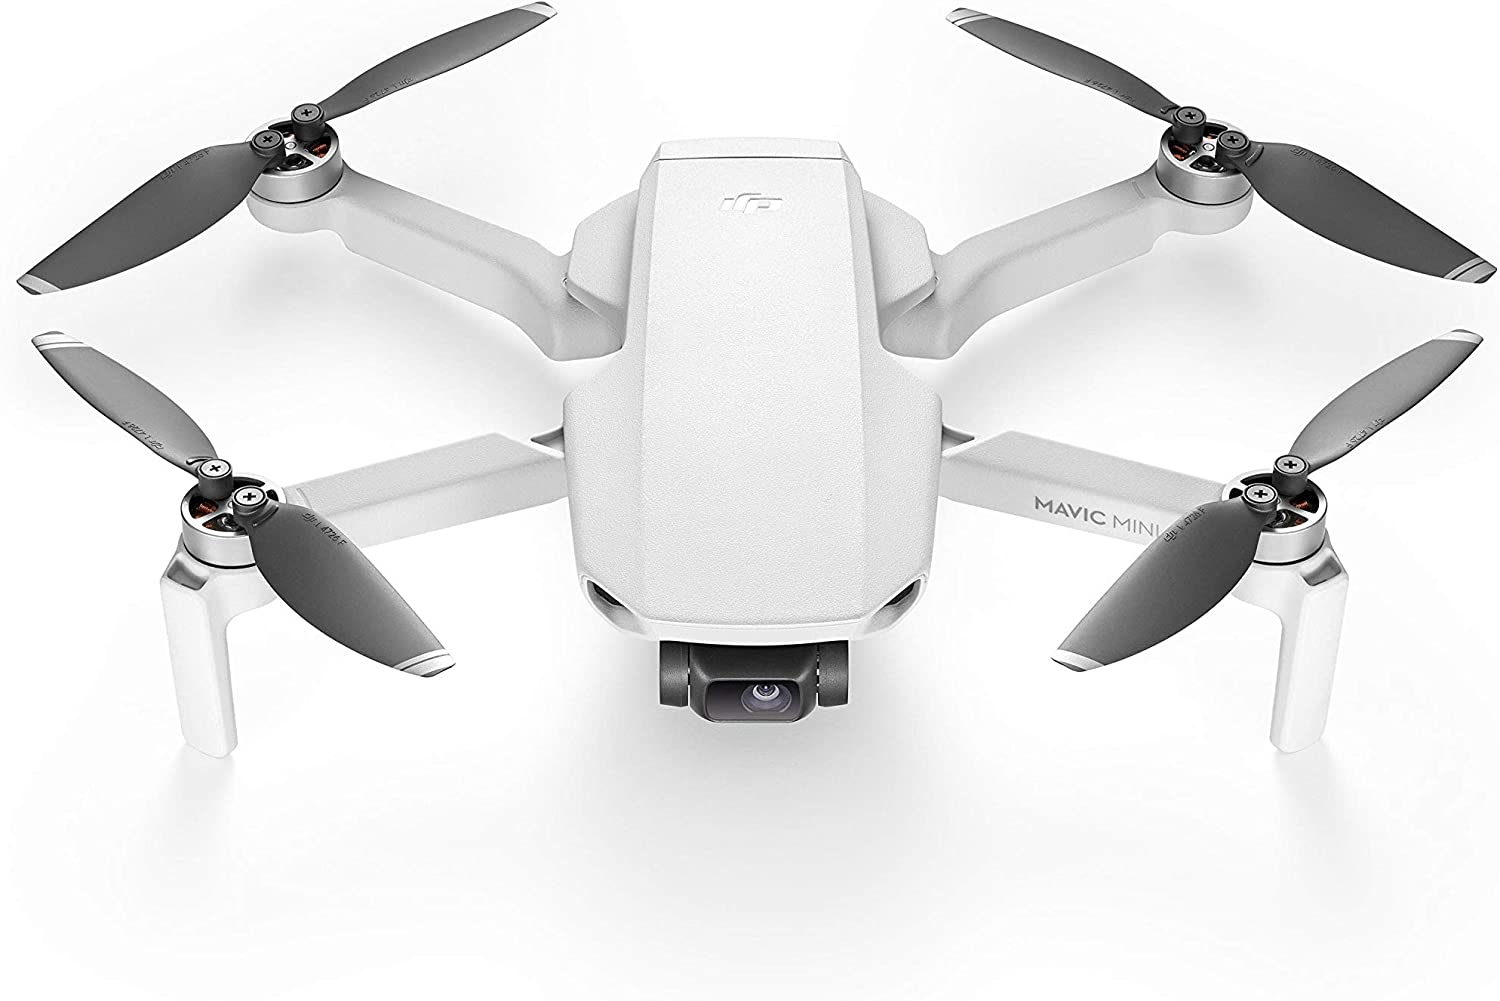 DJI Mavic Mini Combo – Drone FlyCam Quadcopter UAV with 2.7K Camera 3-Axis Gimbal GPS 30min Flight Time, less than 0.55lbs, Gray